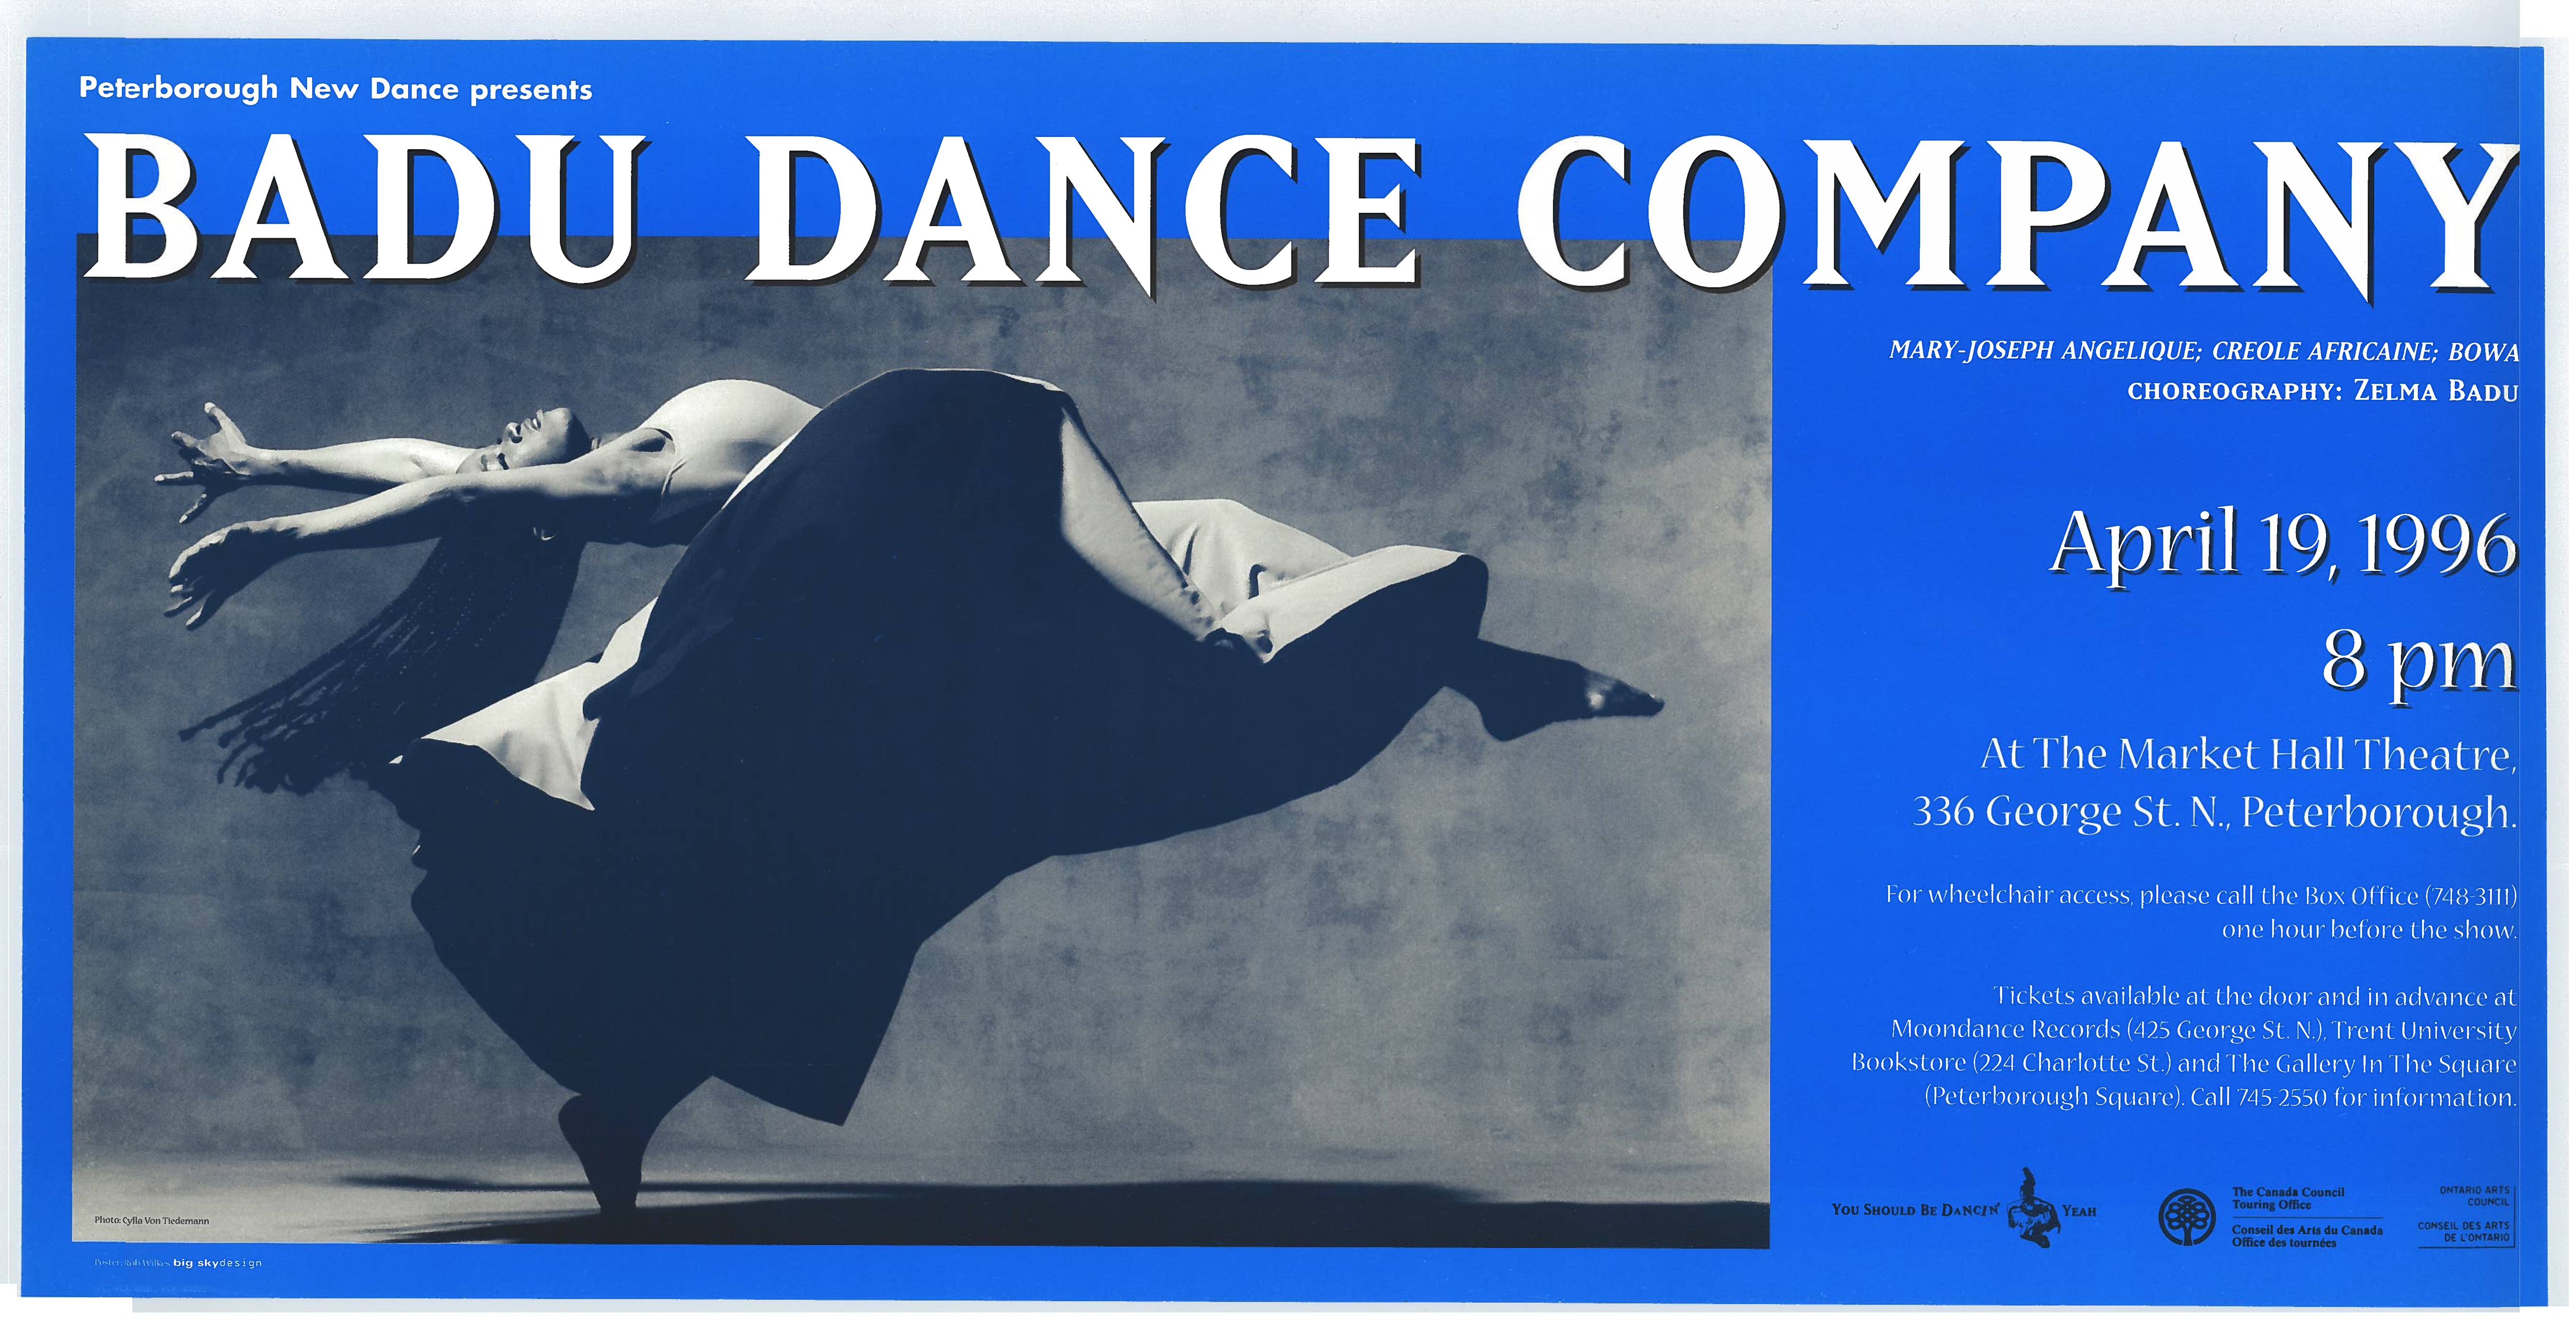 Badu Dance Company Poster for Badu Dance Company in the photo.